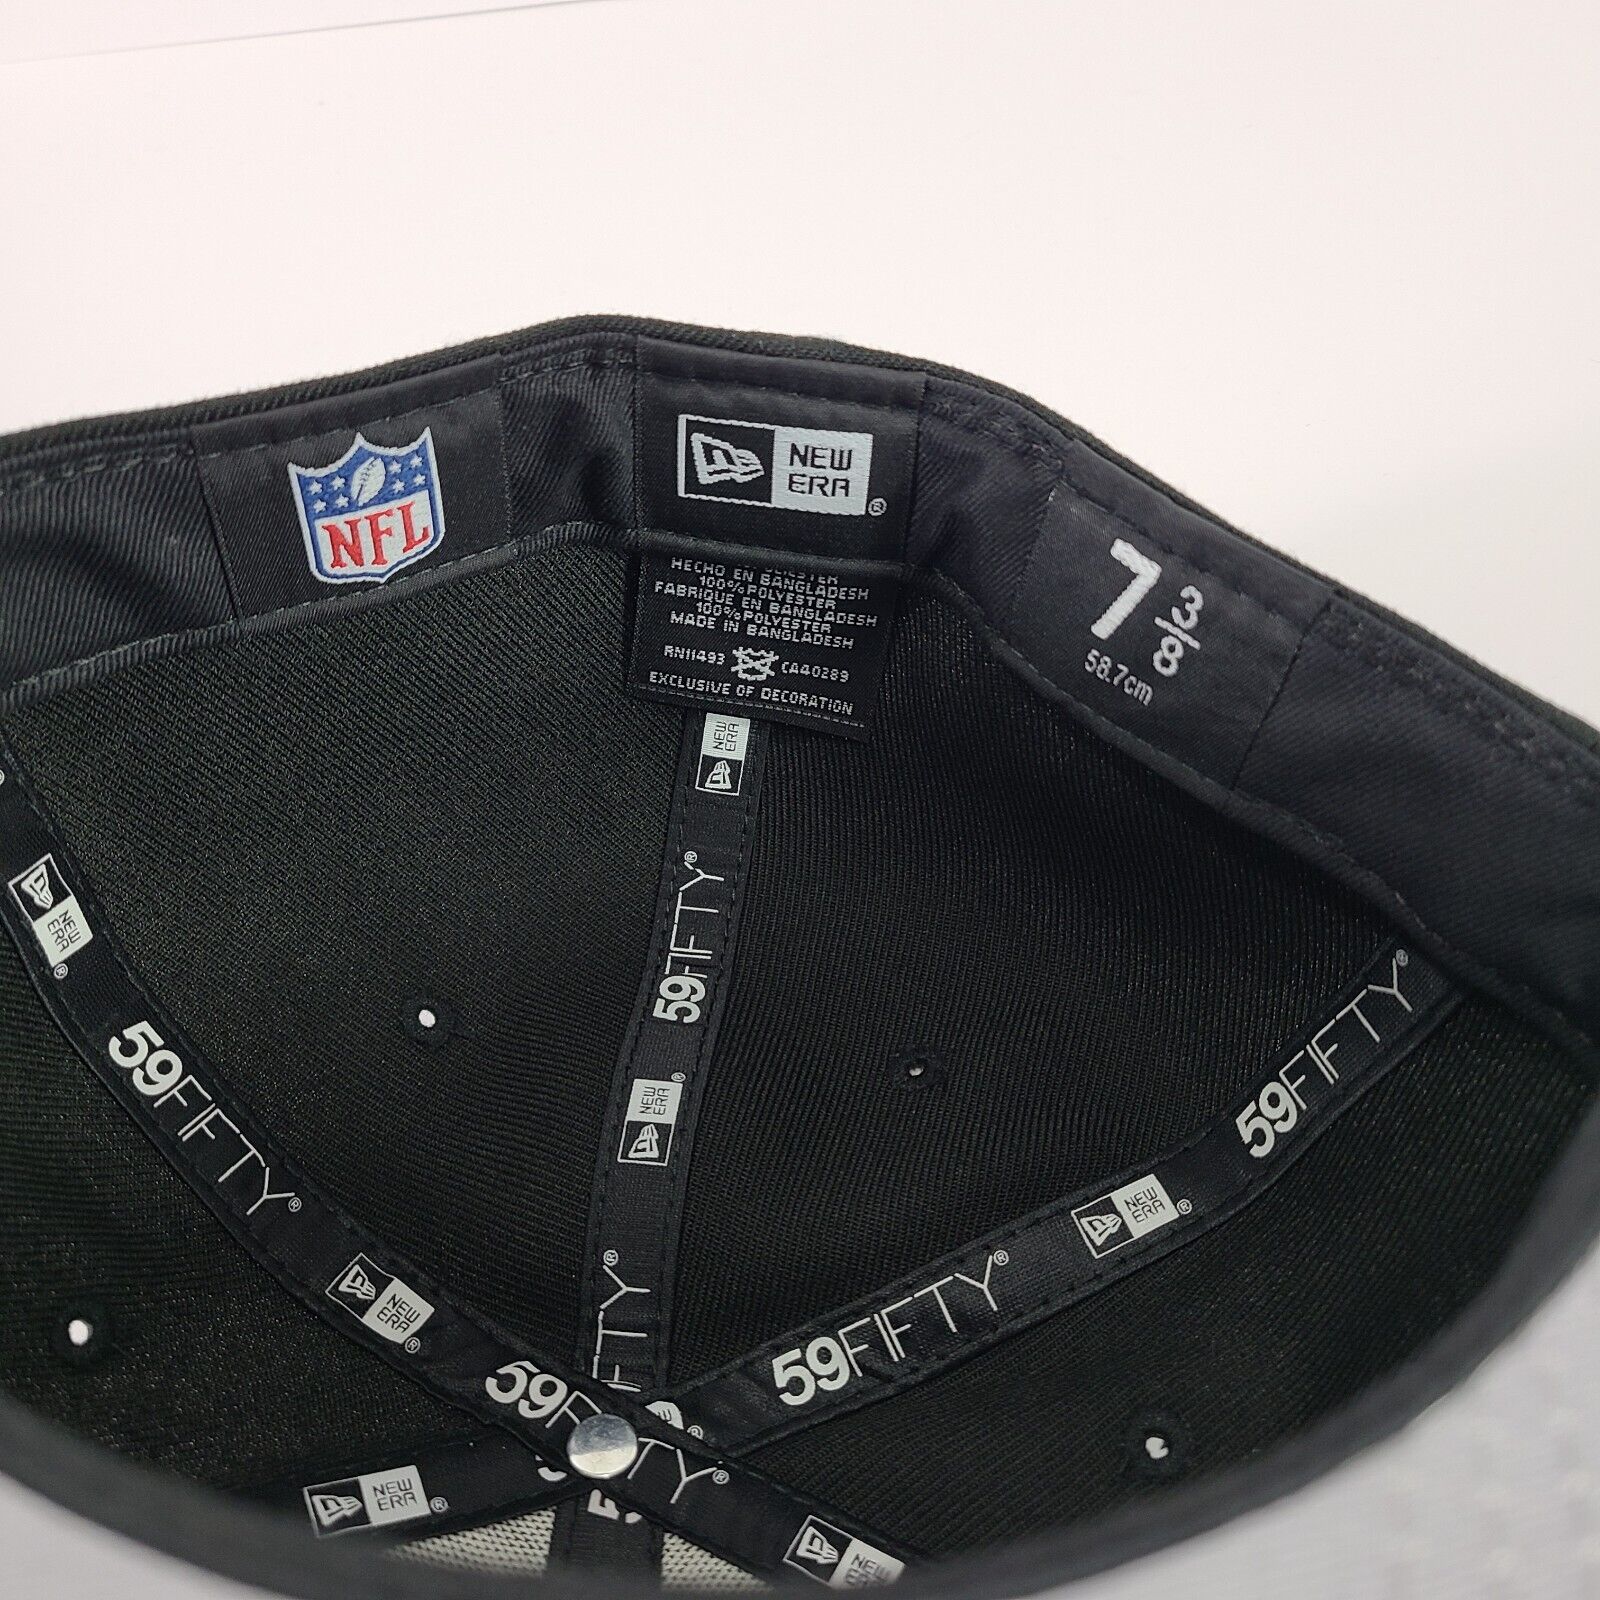 Pittsburgh Steelers New Era 5950 Fitted Hat 7 3/8 Black Gold Bill NWT NFL #i57